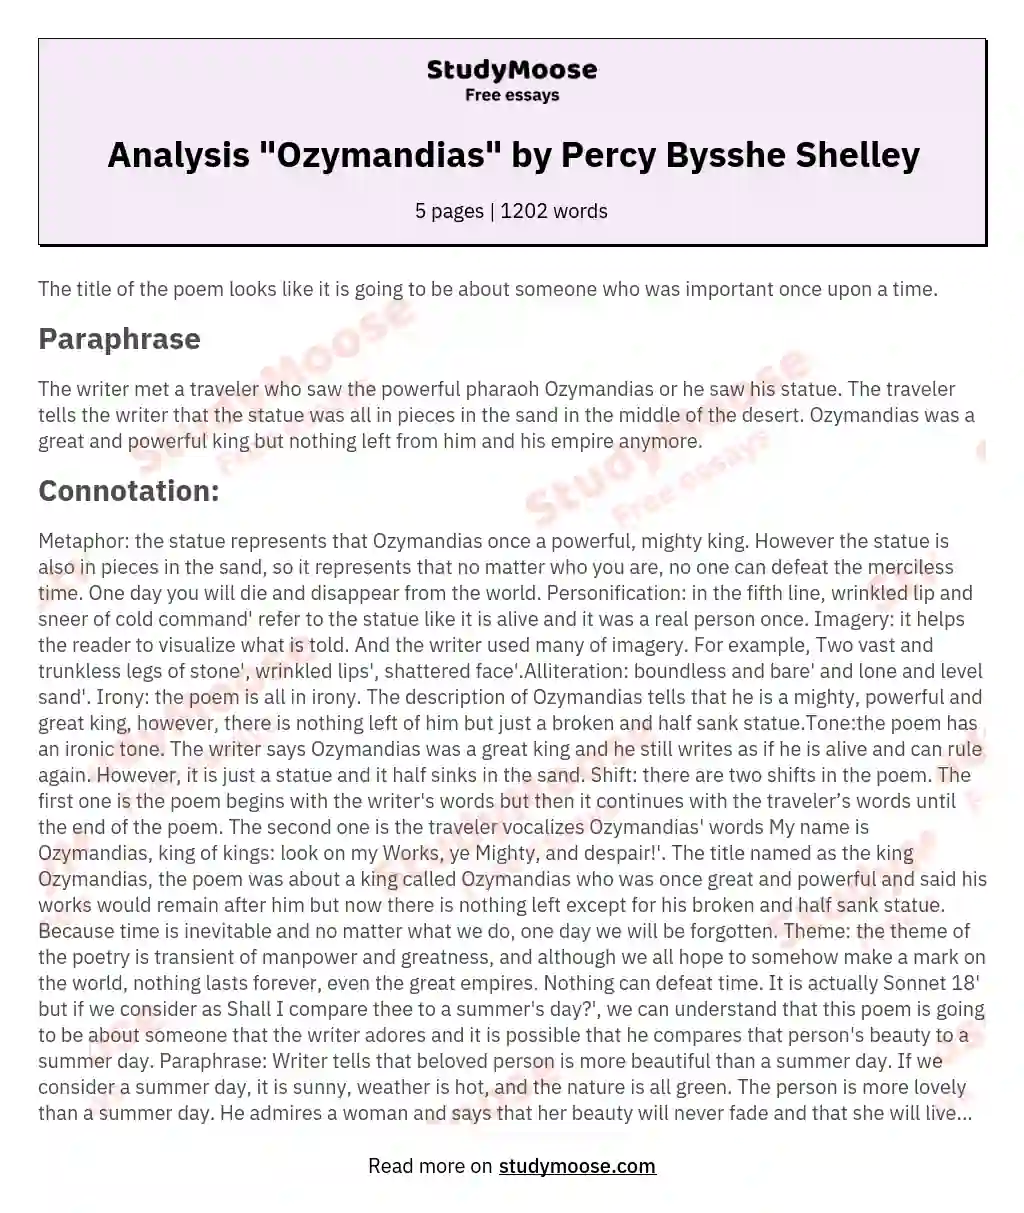 Analysis "Ozymandias" by Percy Bysshe Shelley